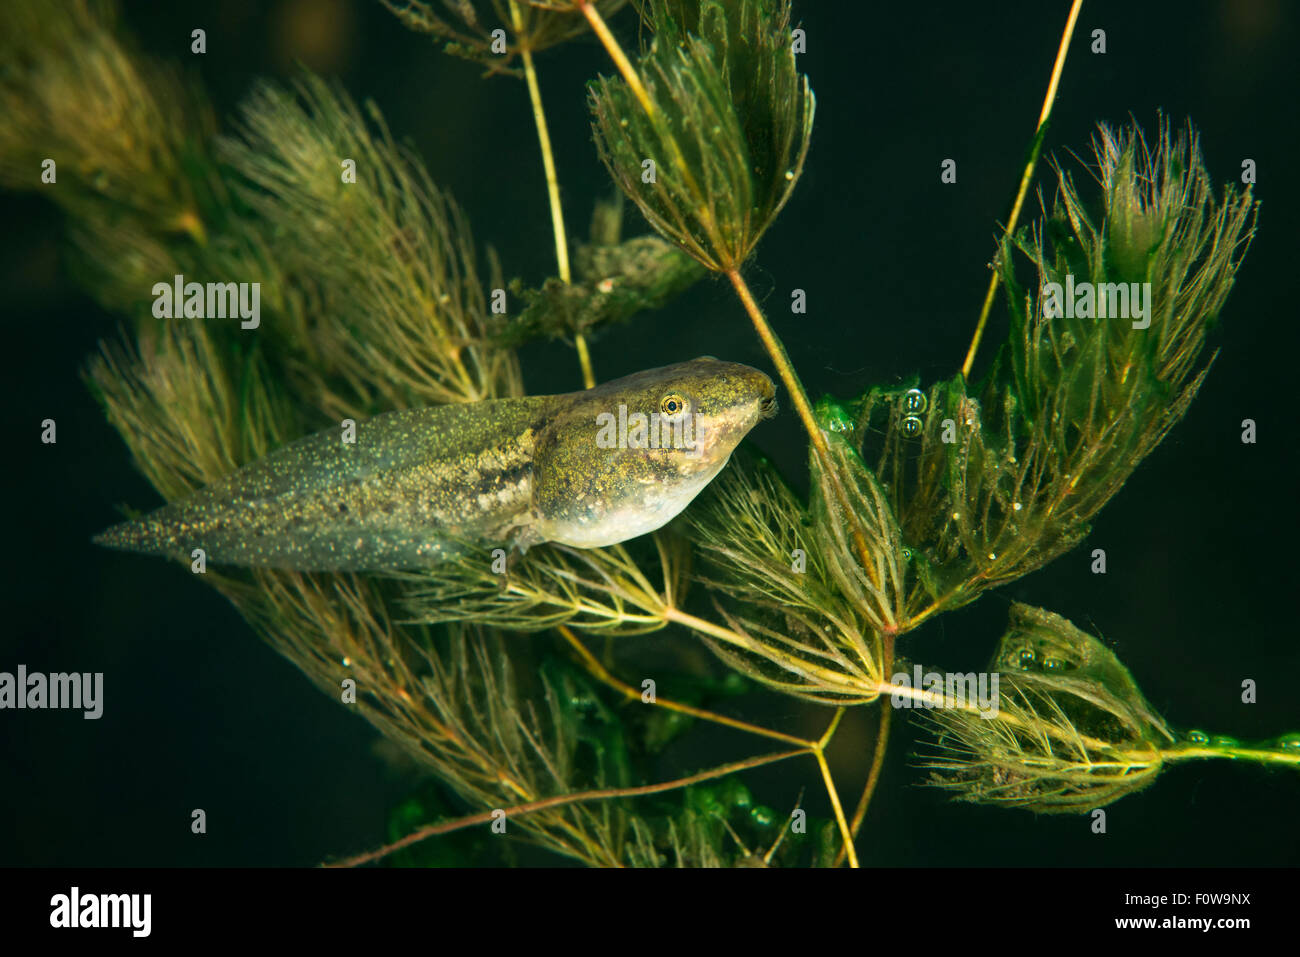 Pool frog tadpole (Pelophylax lessonae) feeding on Soft hornwort (Ceratophyllum submersum) underwater, Danube Delta, Romania, June. Stock Photo